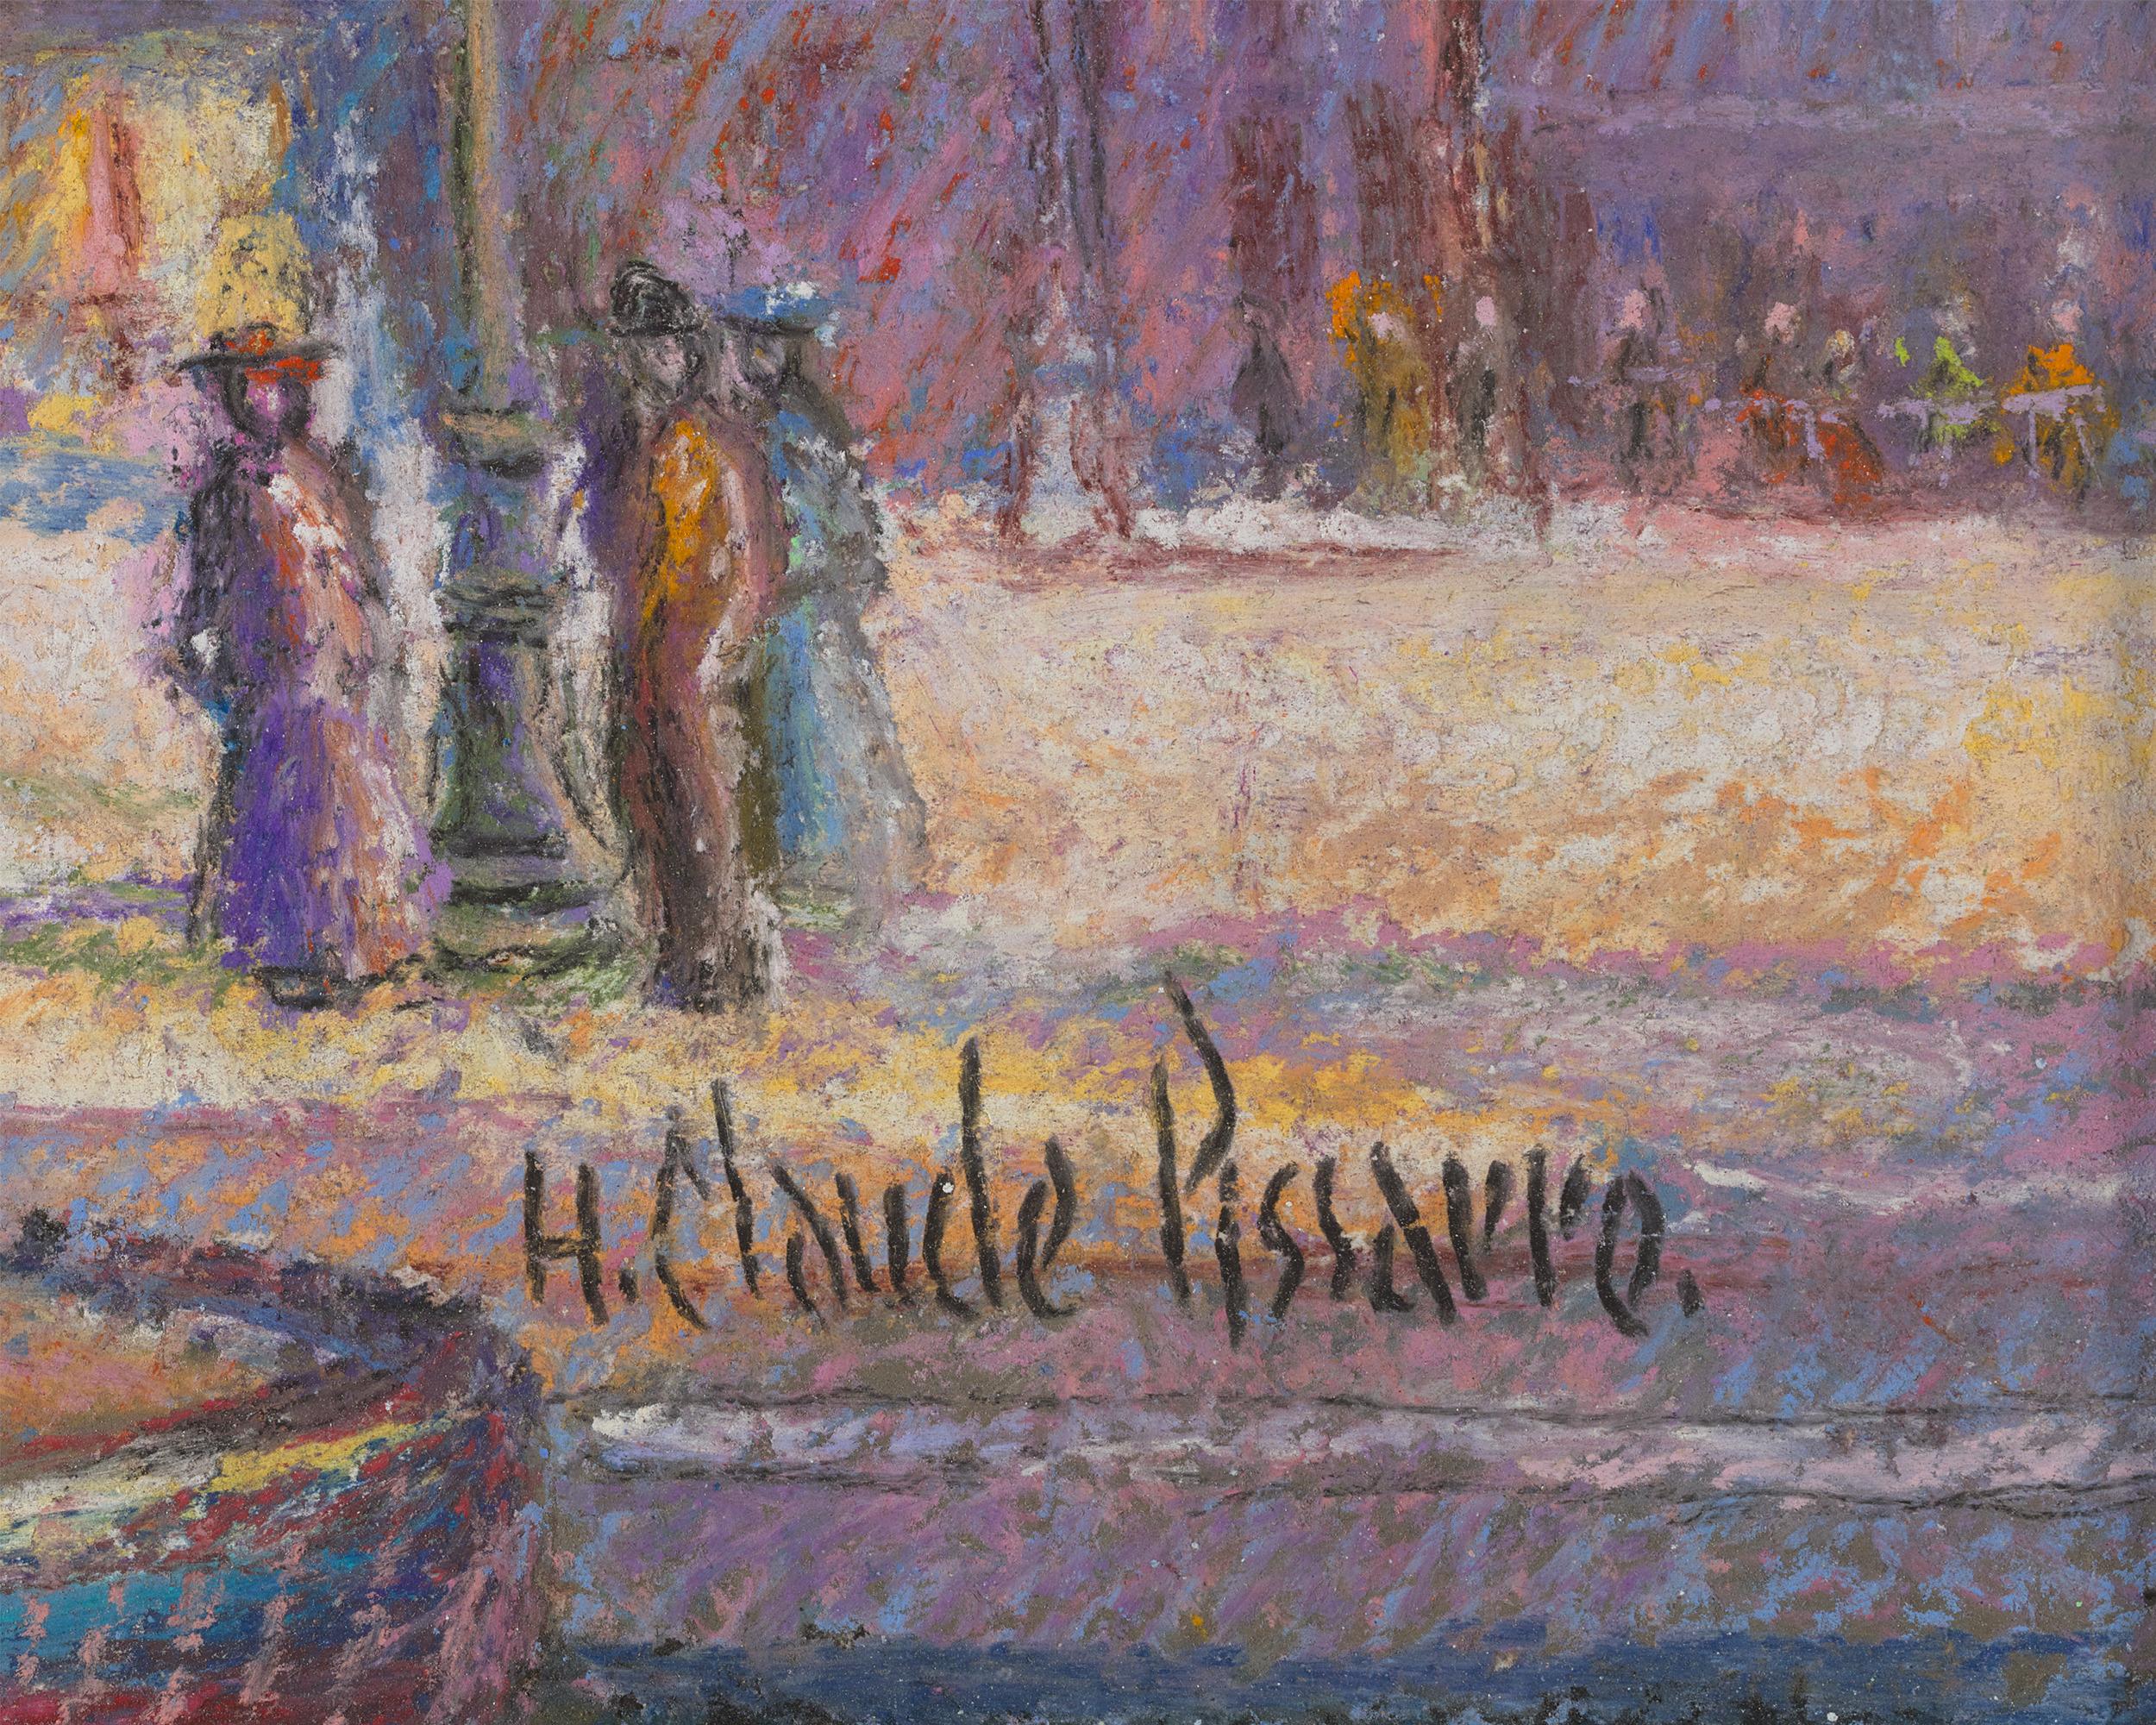 Marseille La Cannebière by H. Claude Pissarro - Post-Impressionist Art by Hughes Claude Pissarro